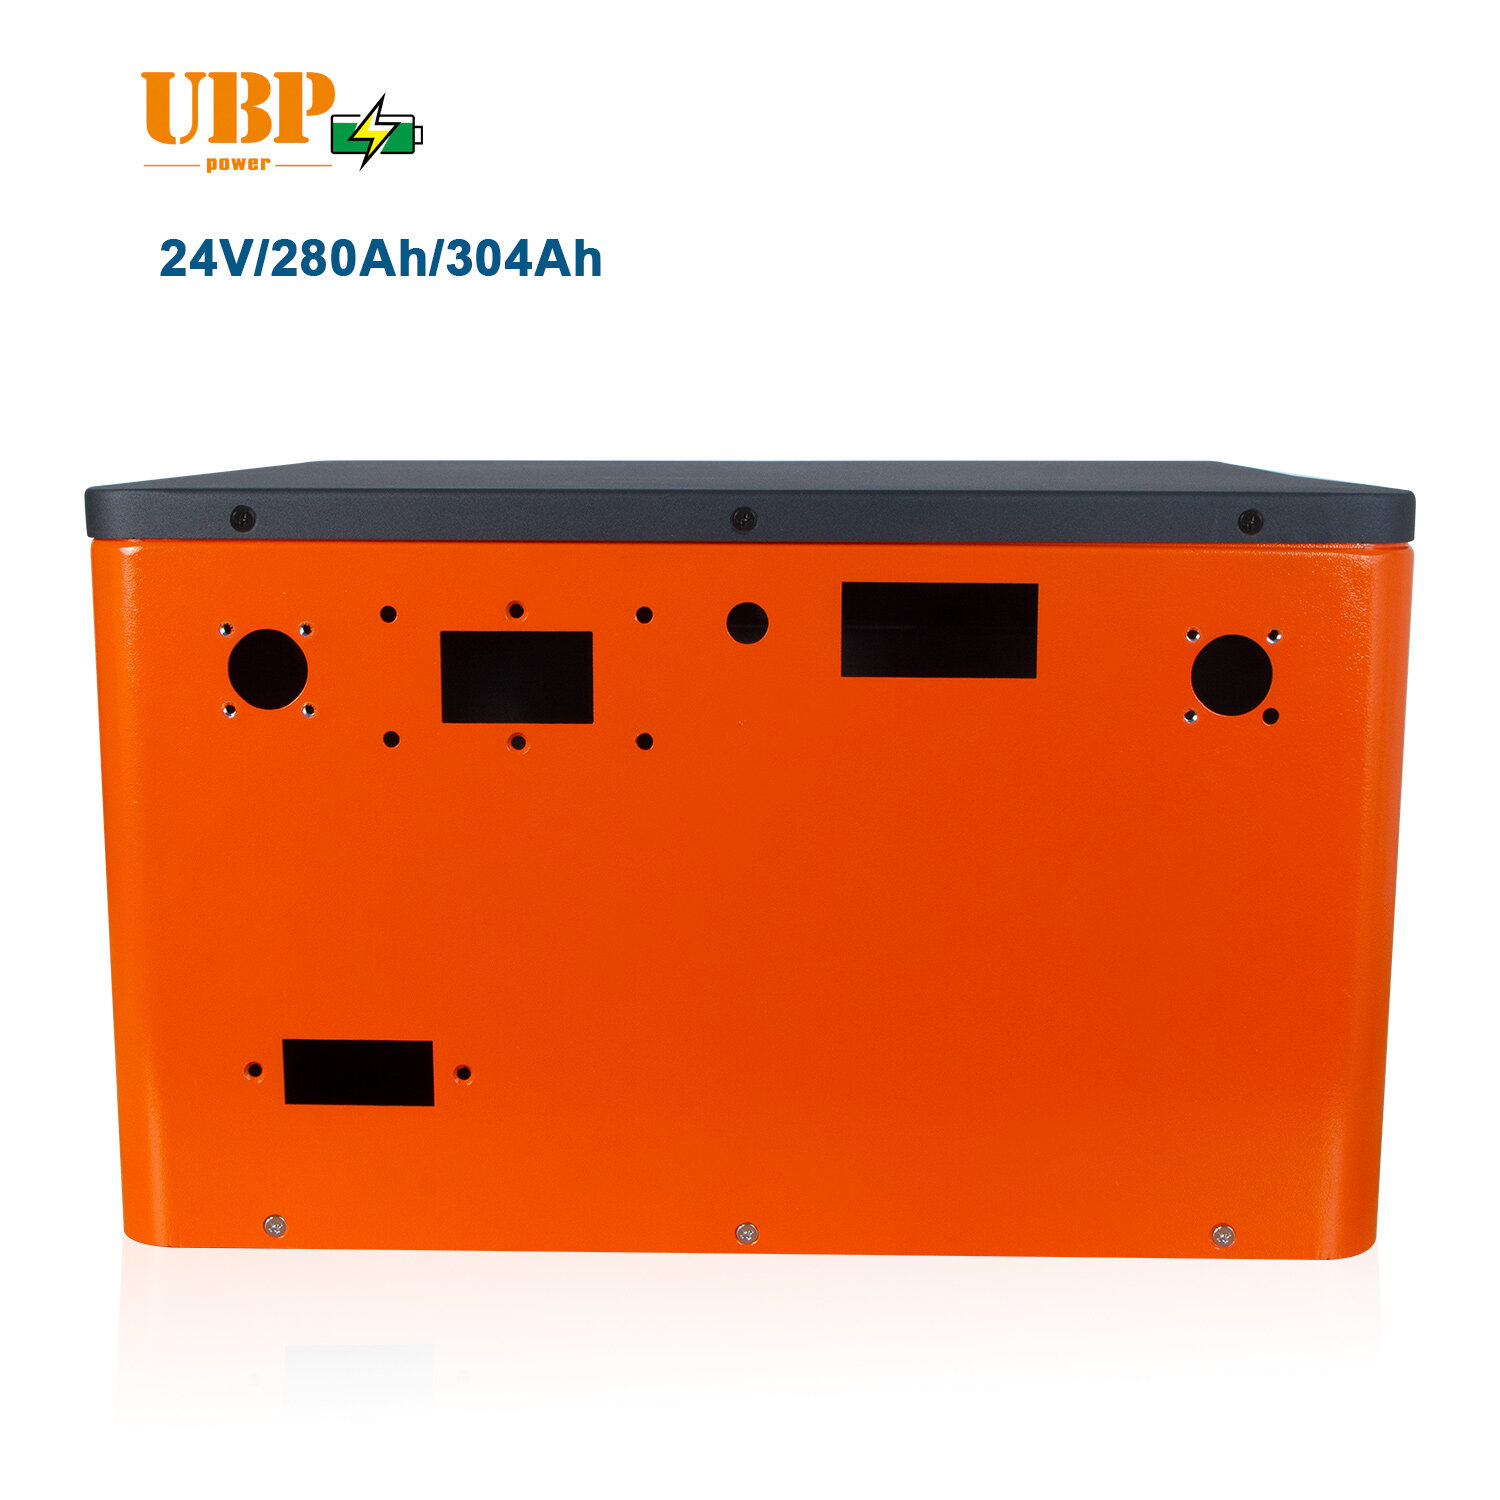 UBPPOWER 24V 280Ah/304Ah LiFePo4 DIY Battery Box Case Kits